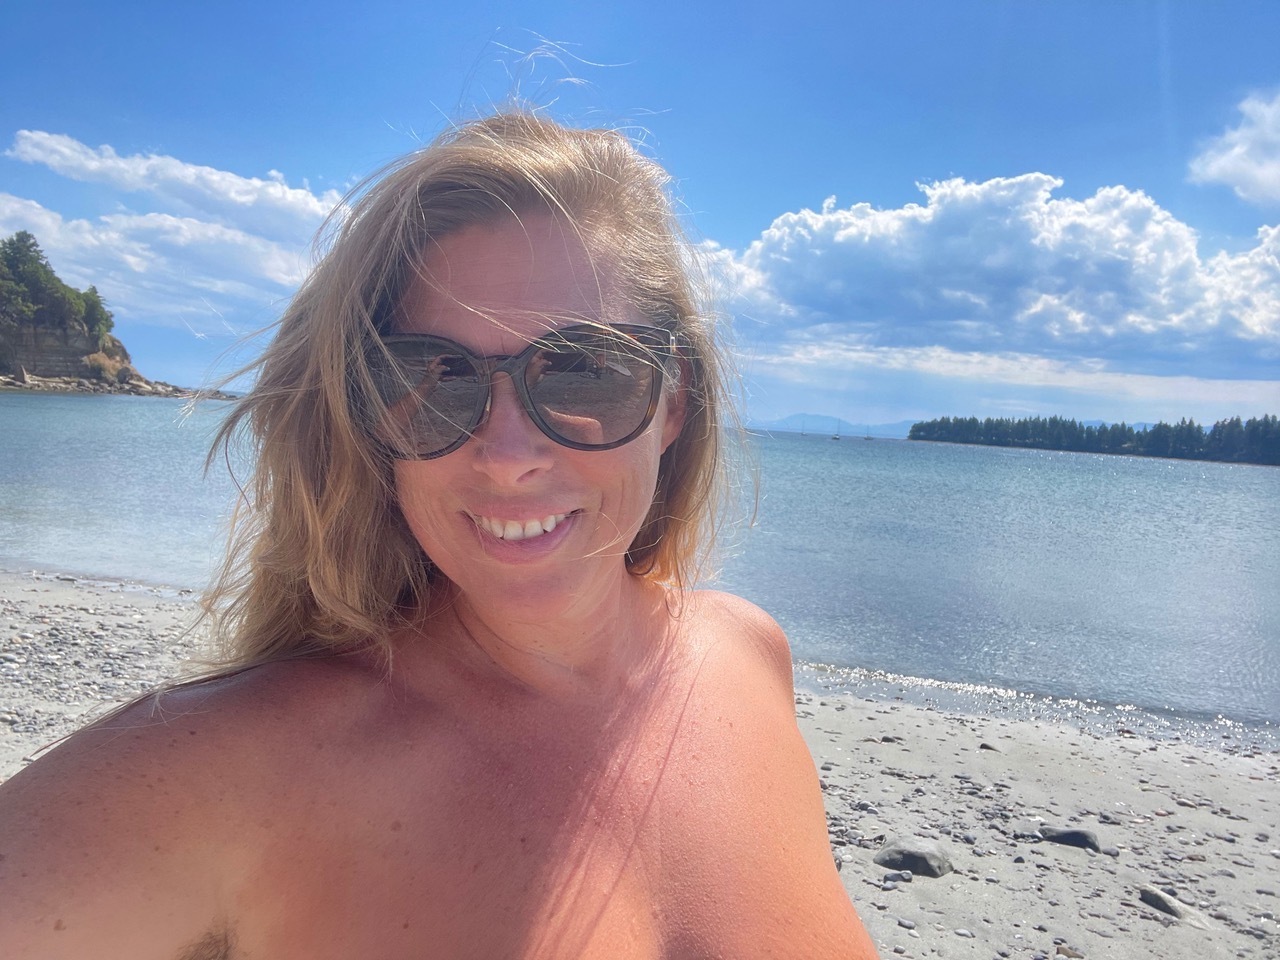 girlfriend experience nude beach free video